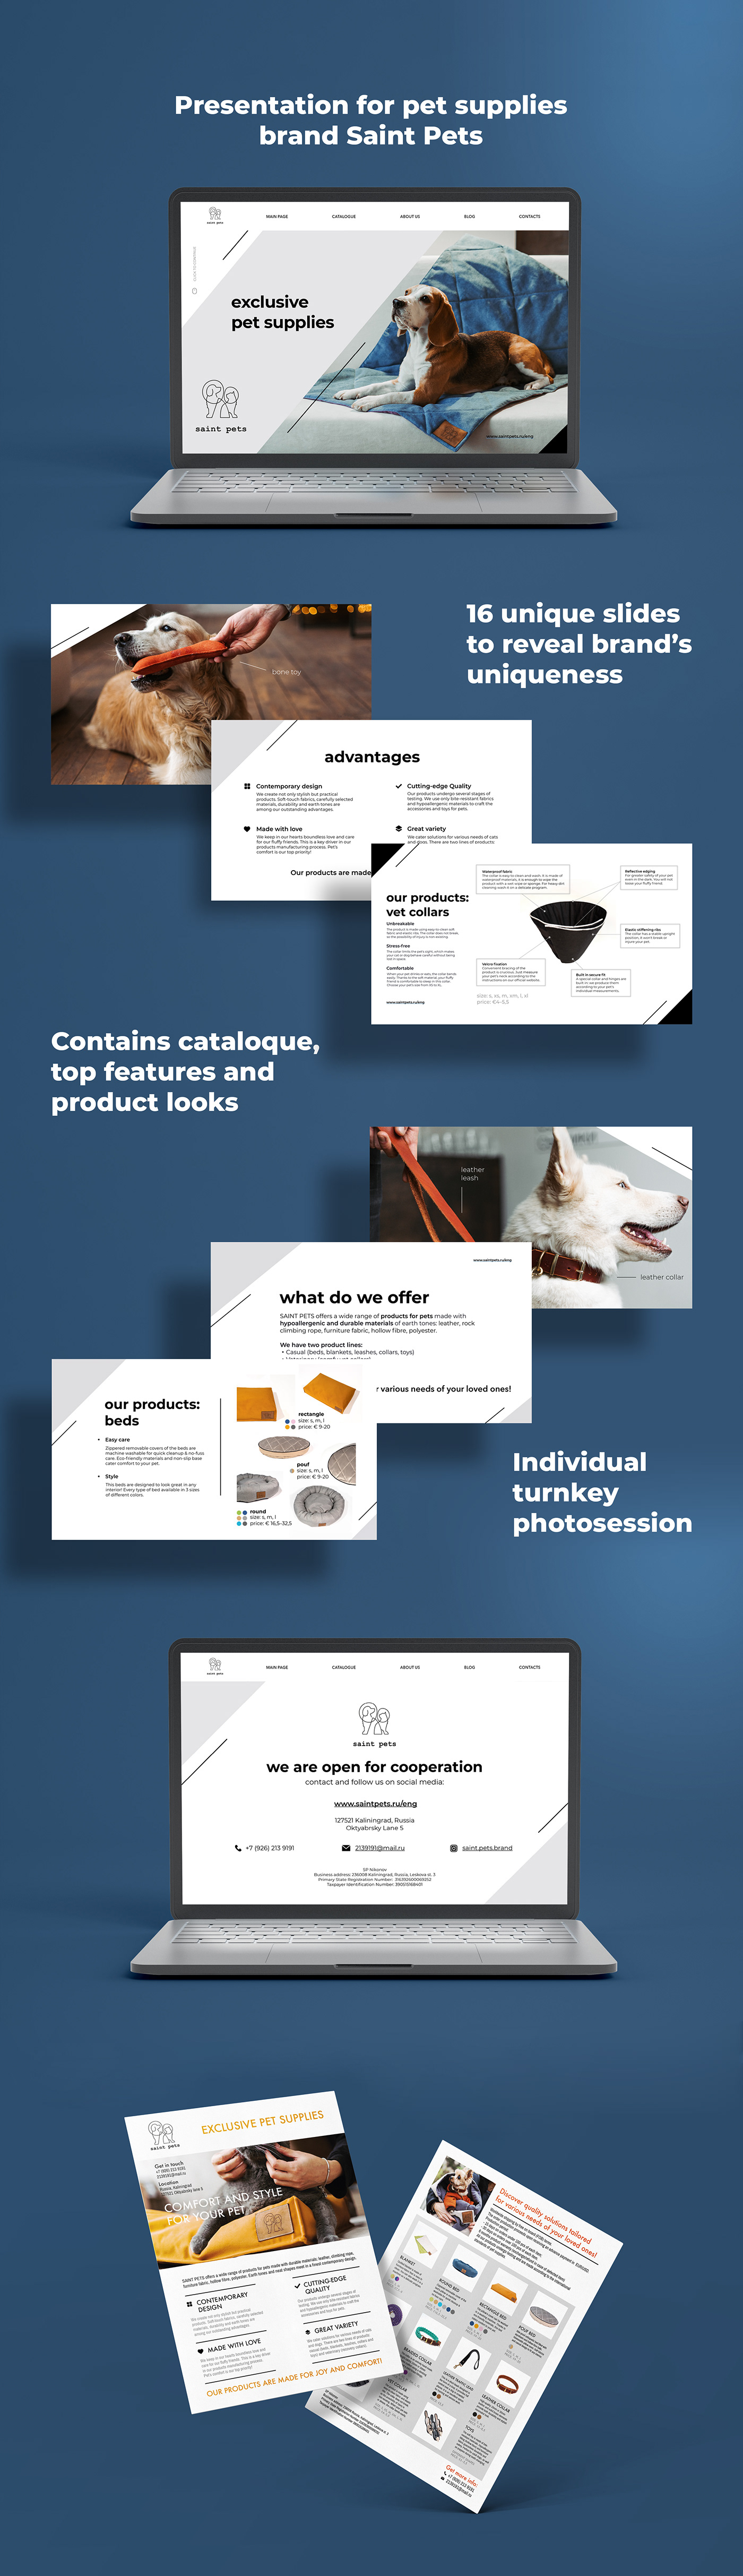 Corporate Identity photosession presentation print material art-direction slides brochure brochure design infographic presentation design